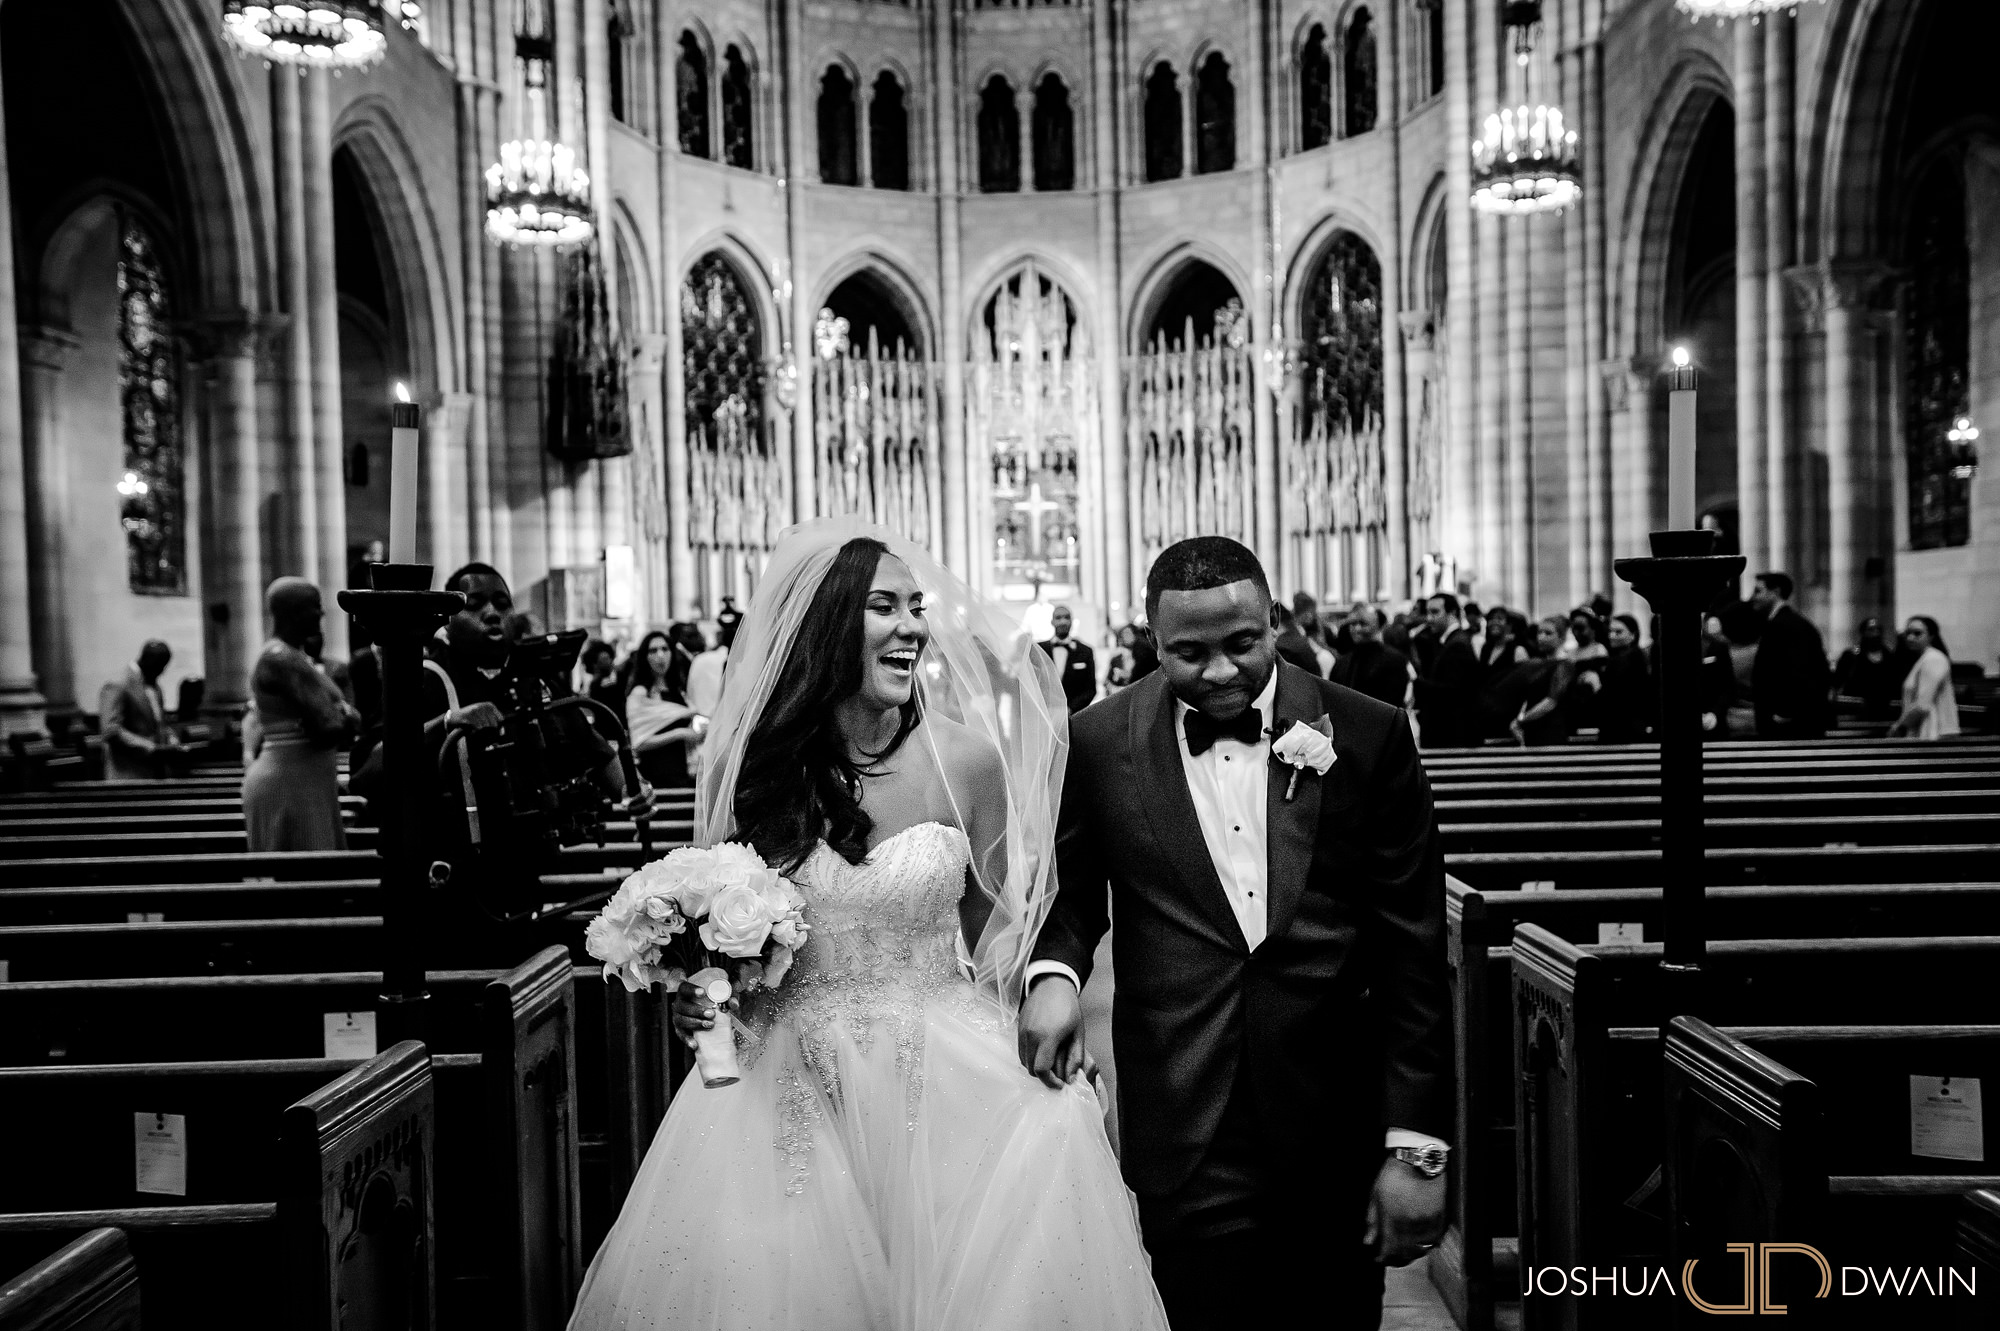 Ebony & Vernon's wedding at the Riverside Church